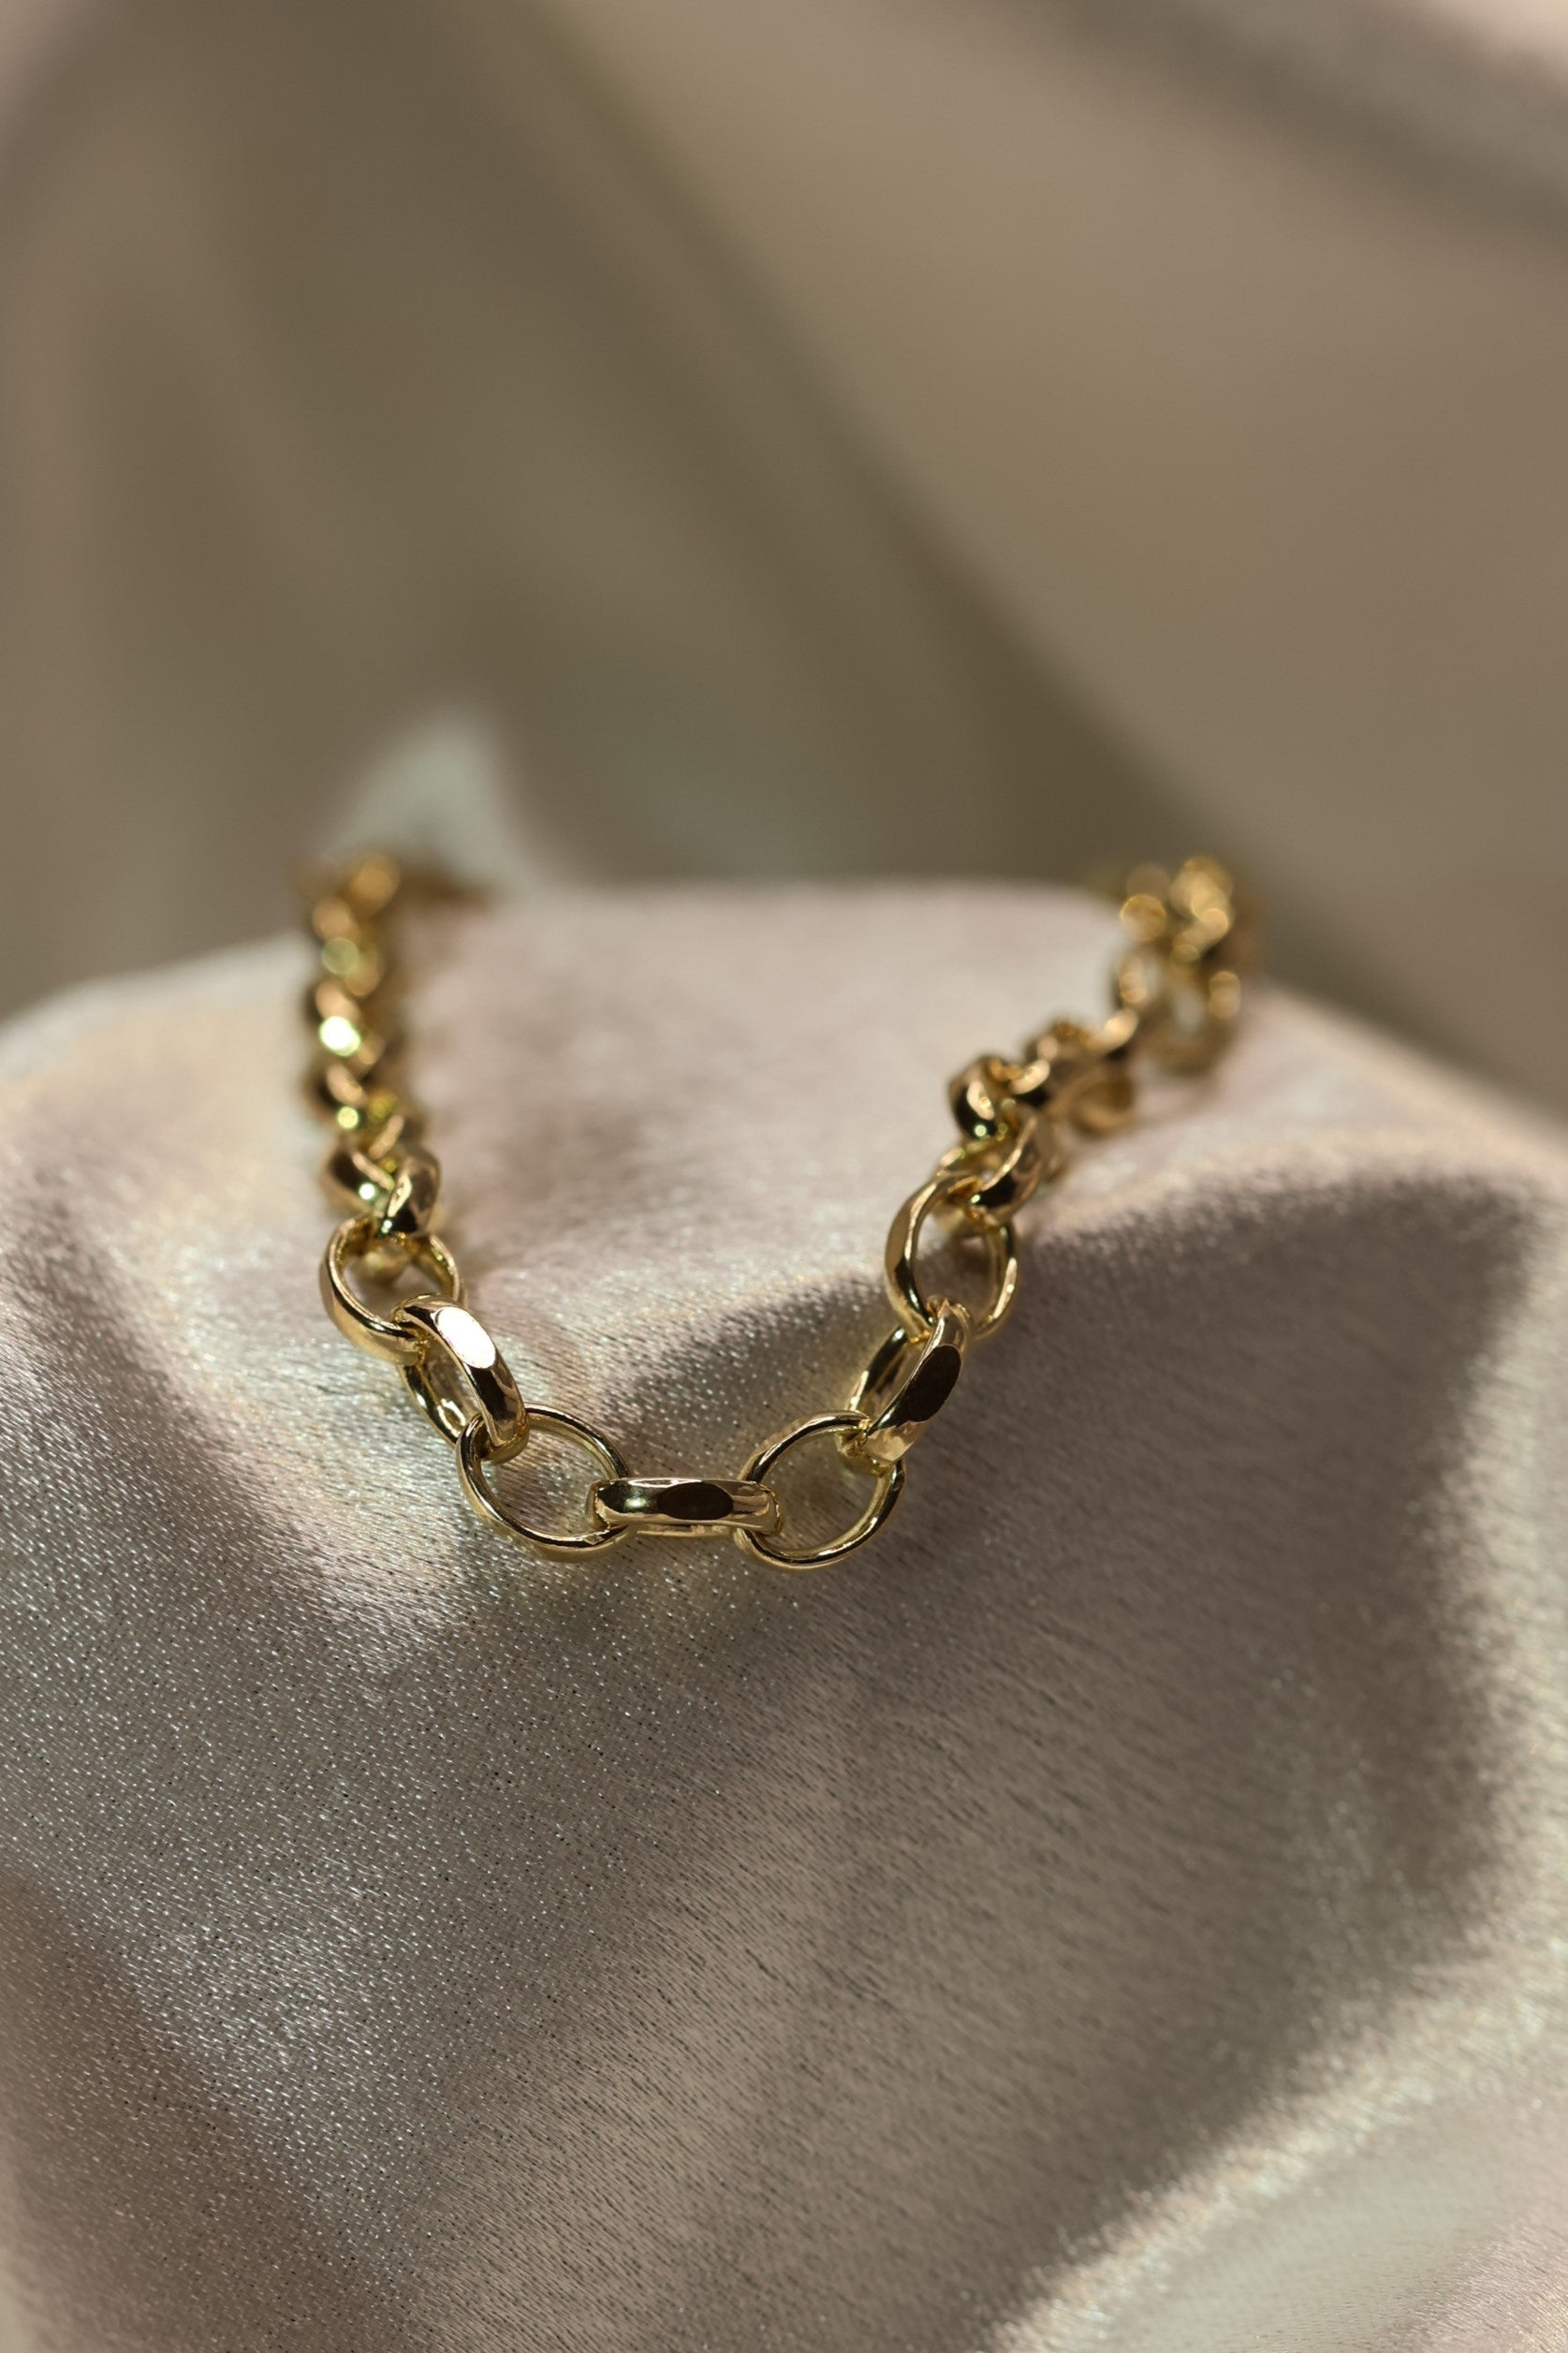 Vintage Solid 9ct Gold Curb Charm Bracelet, 88.5 Grams - Etsy